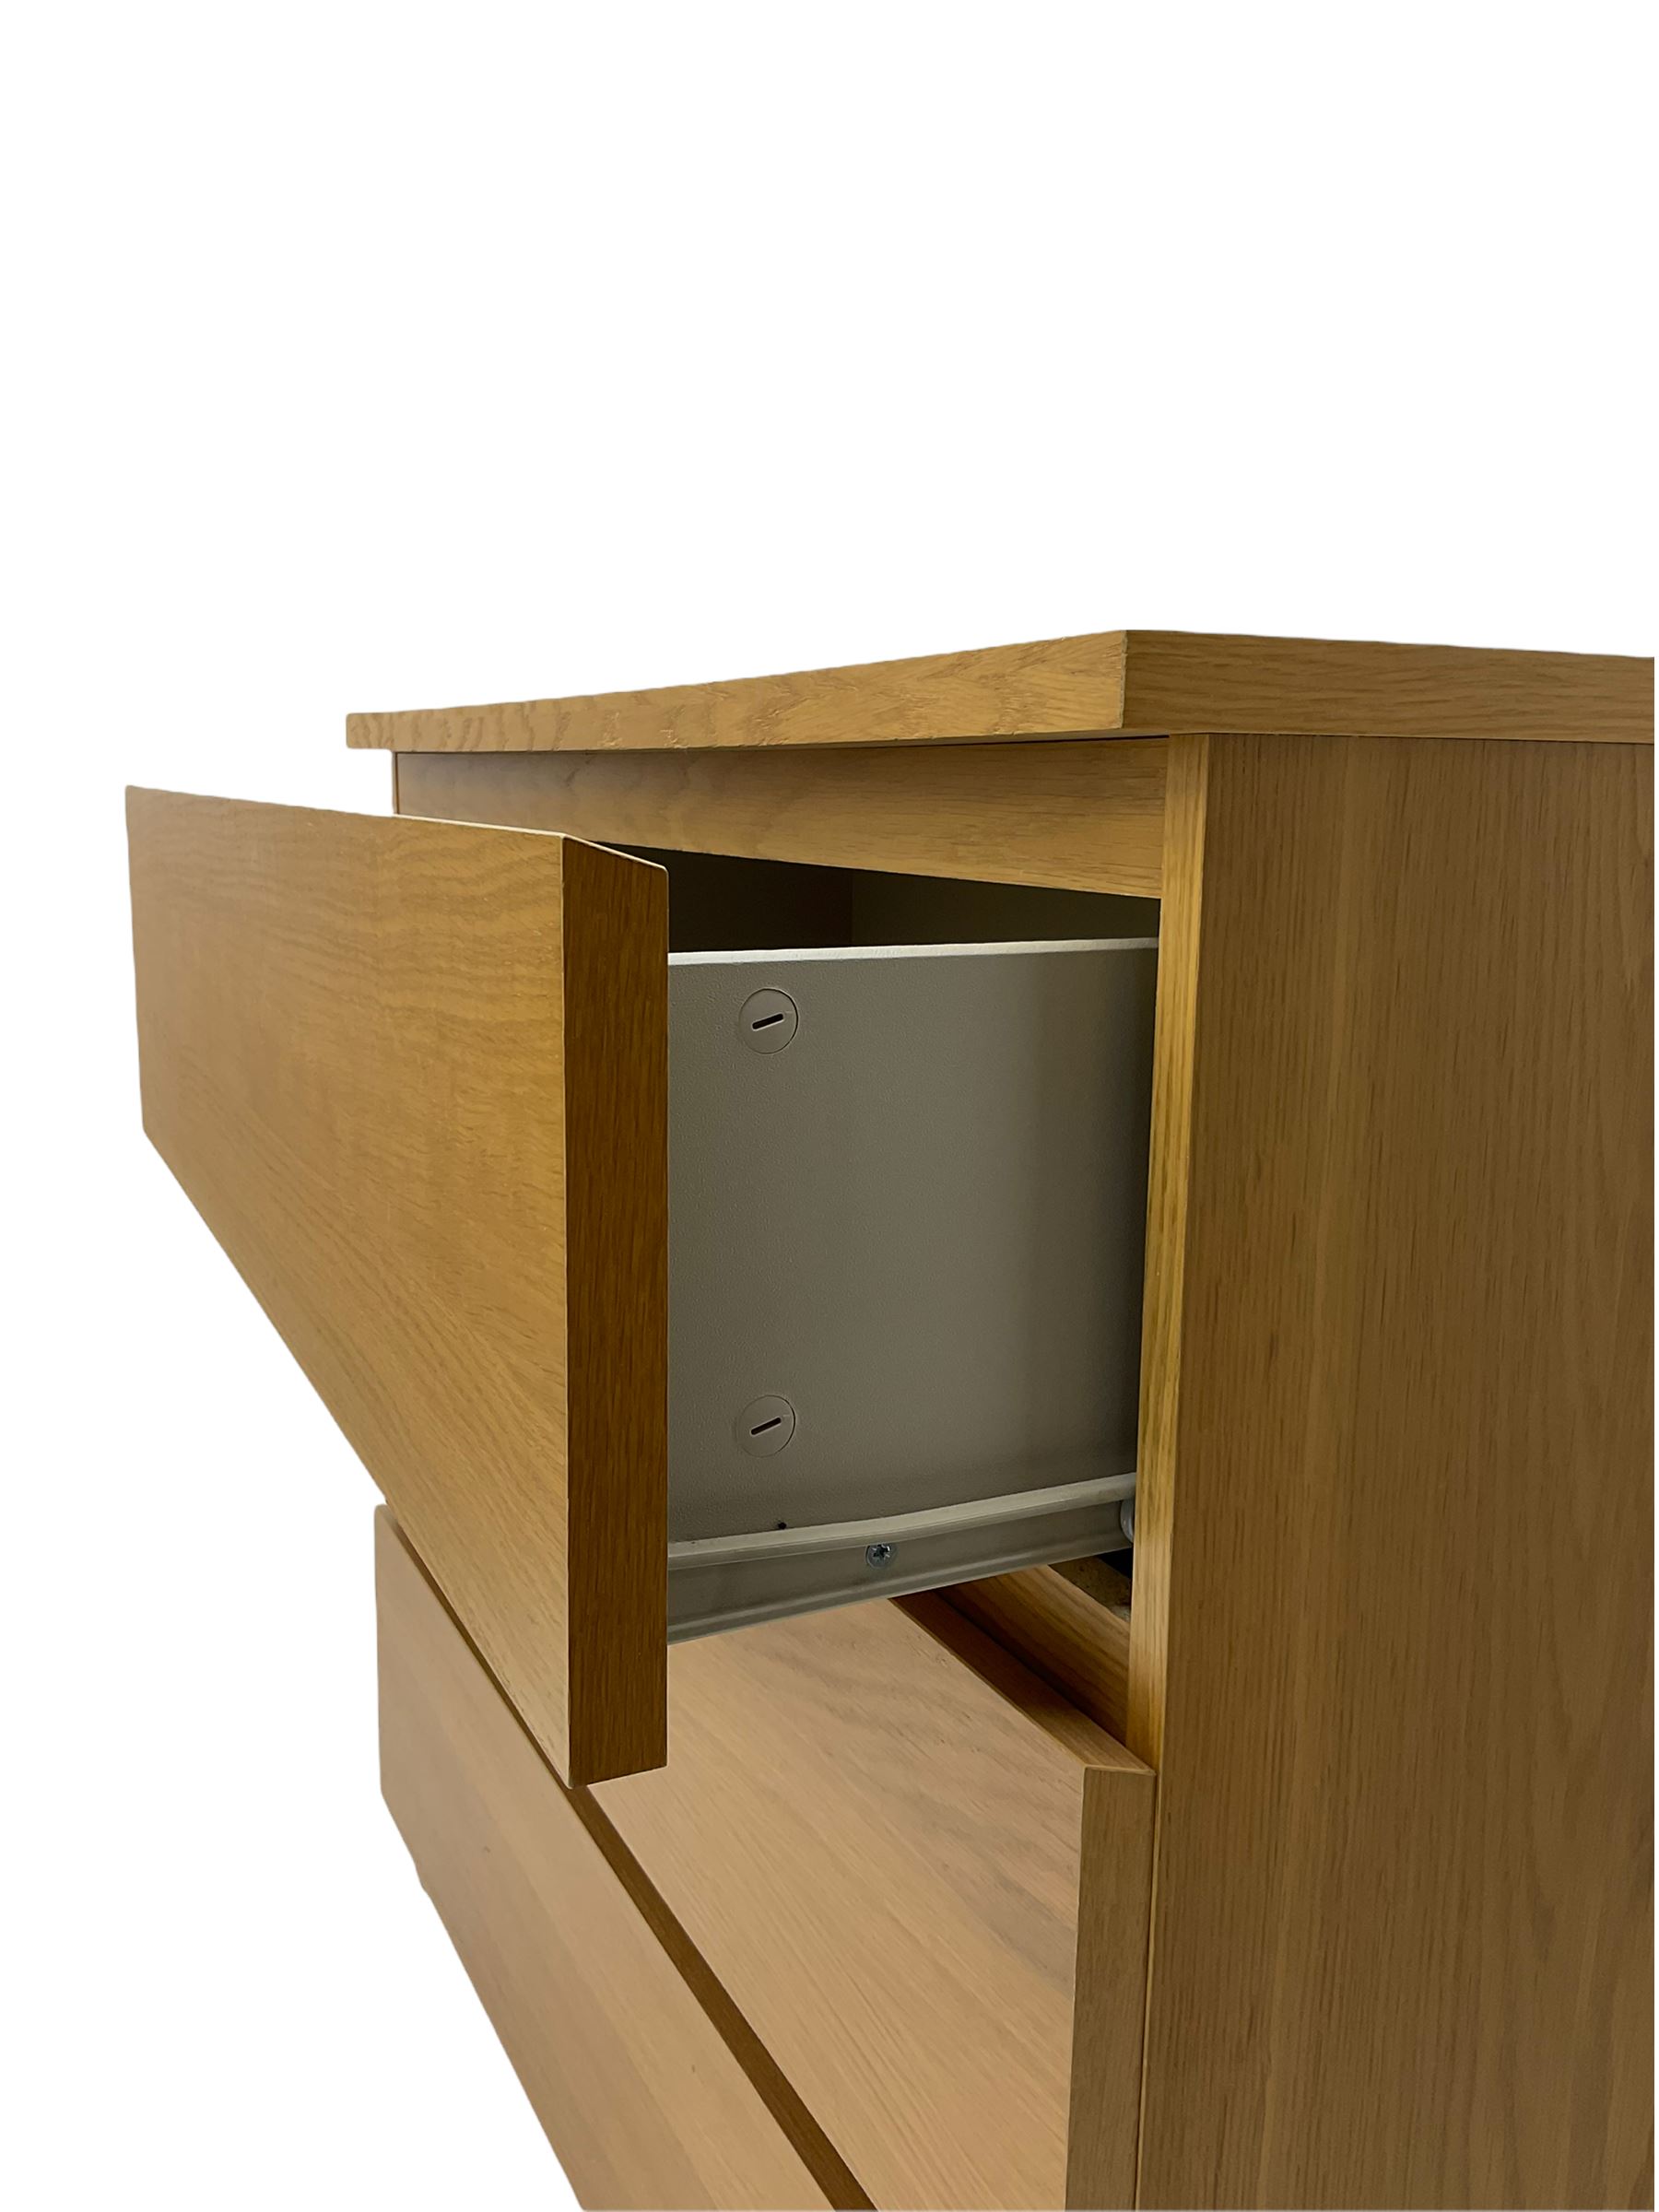 Ikea light oak three drawer chest - Image 4 of 6